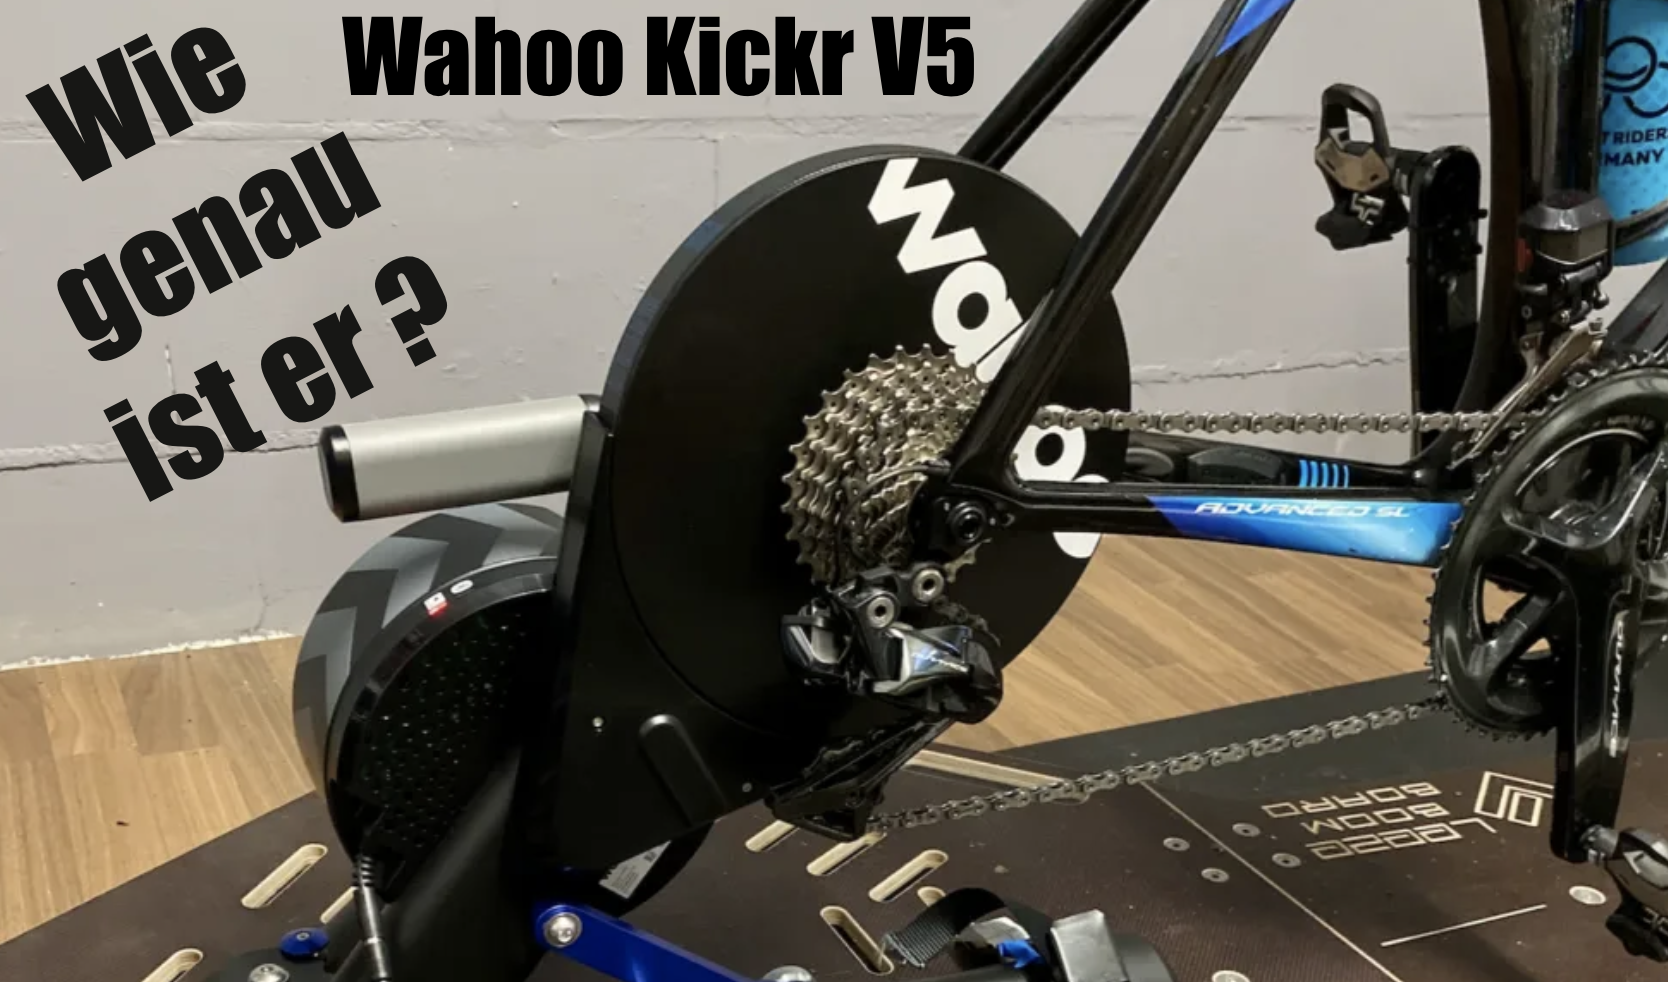 Wahoo Kickr V5 – Genau, darum geht es.